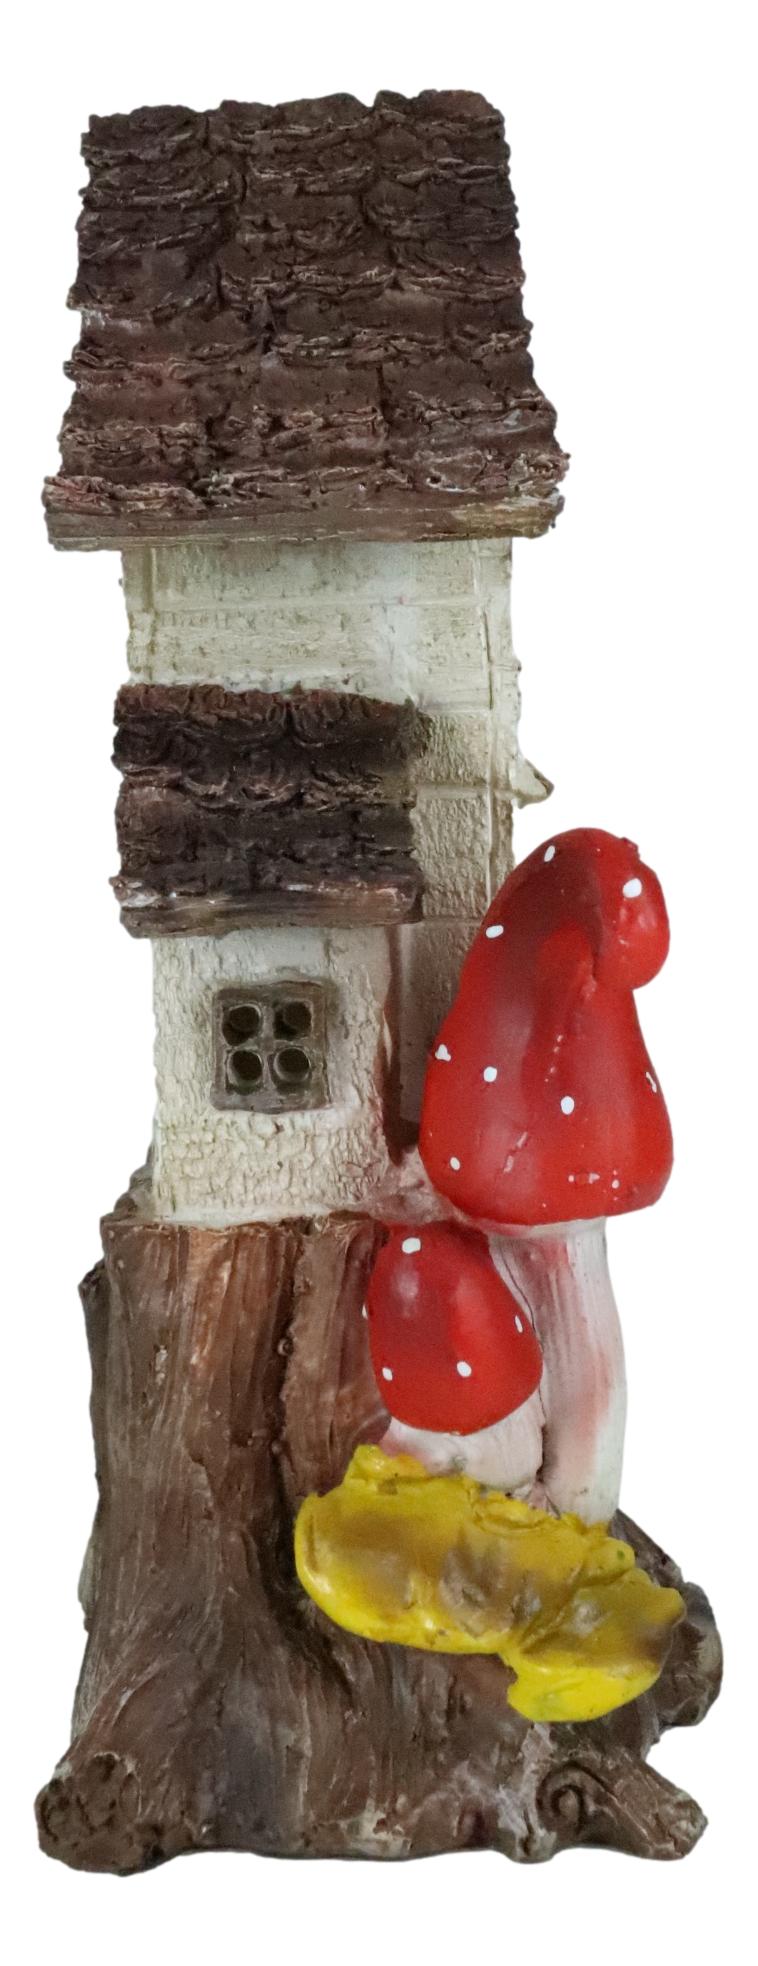 Fairy Garden LED Light Up Cottage Tree House With Toadstool Mushrooms Figurine